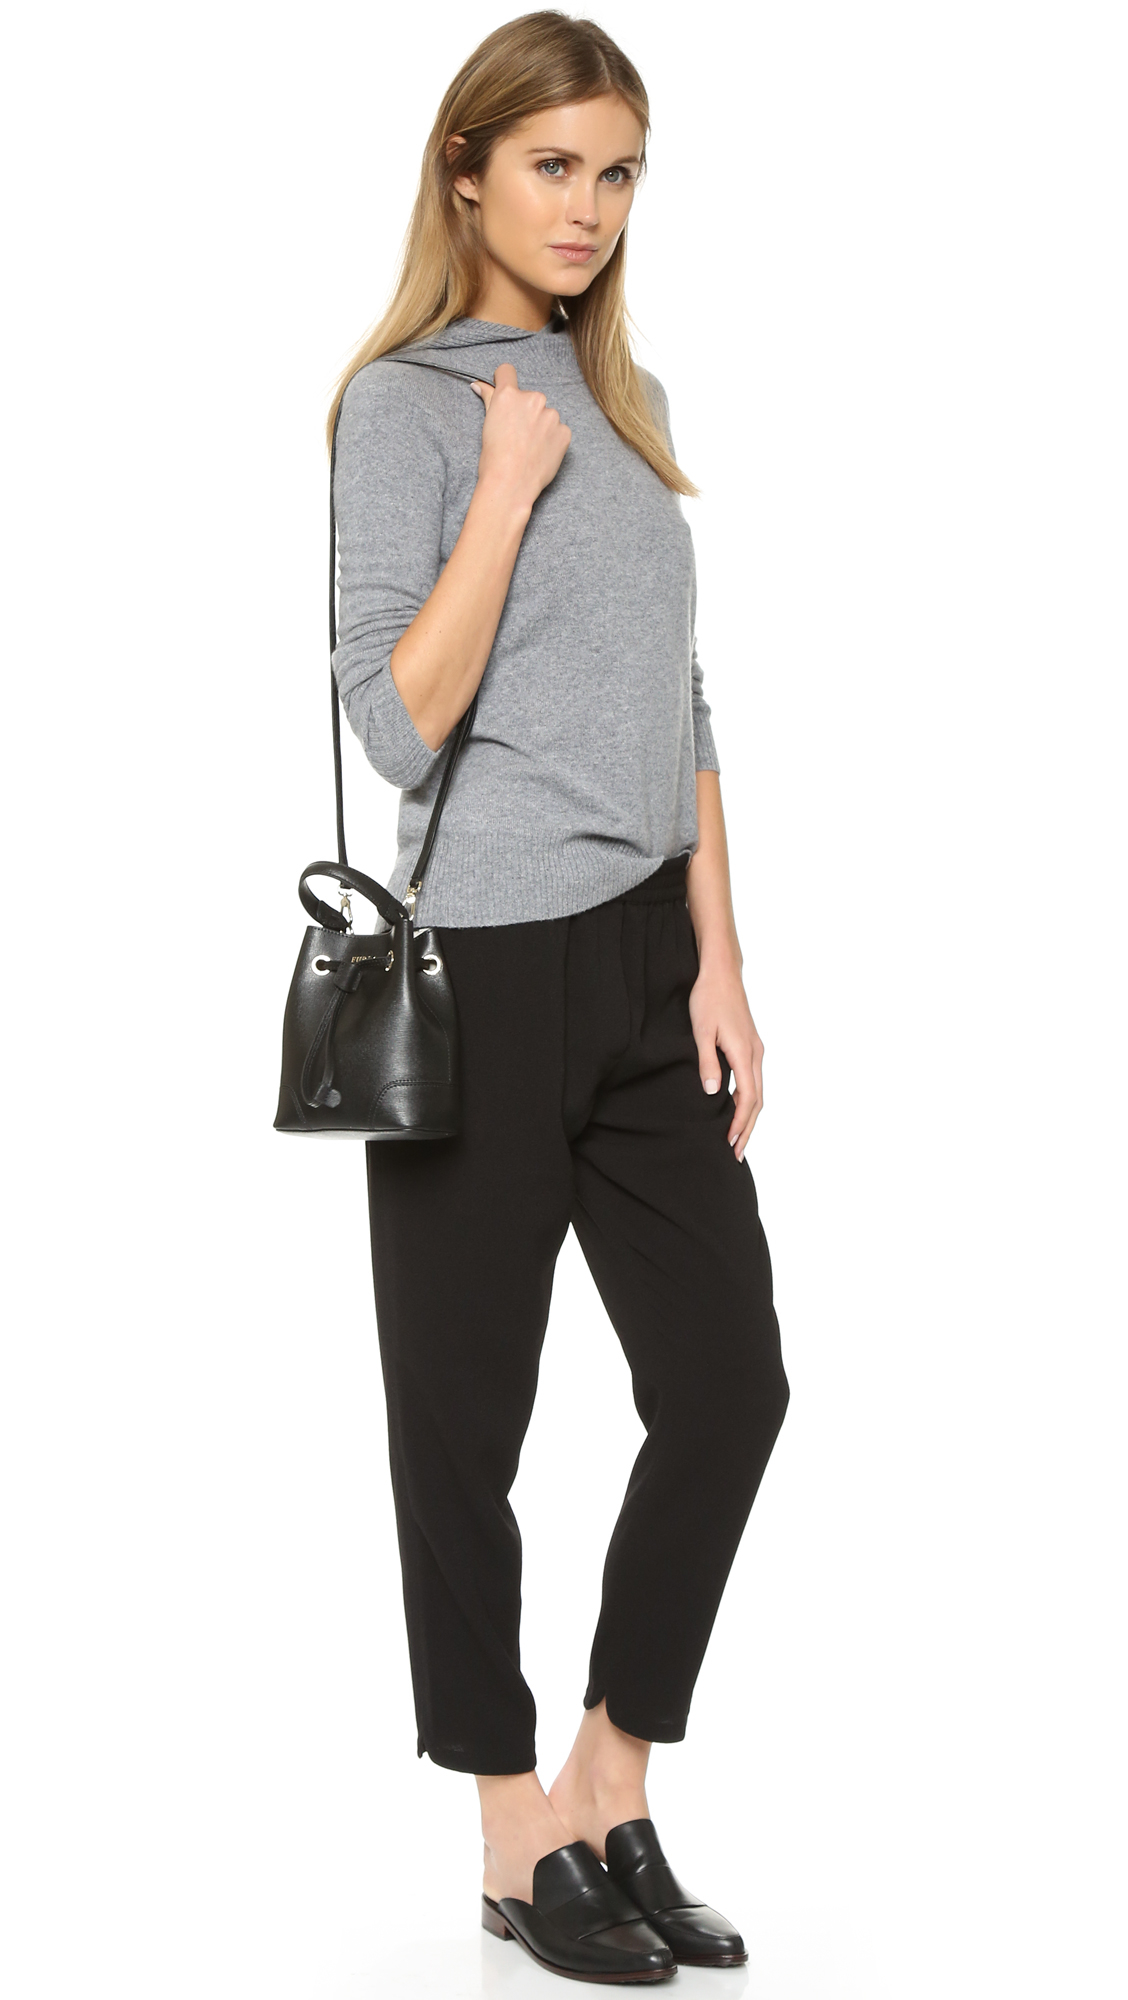 Furla Stacy Mini Drawstring Bucket Bag in Black | Lyst